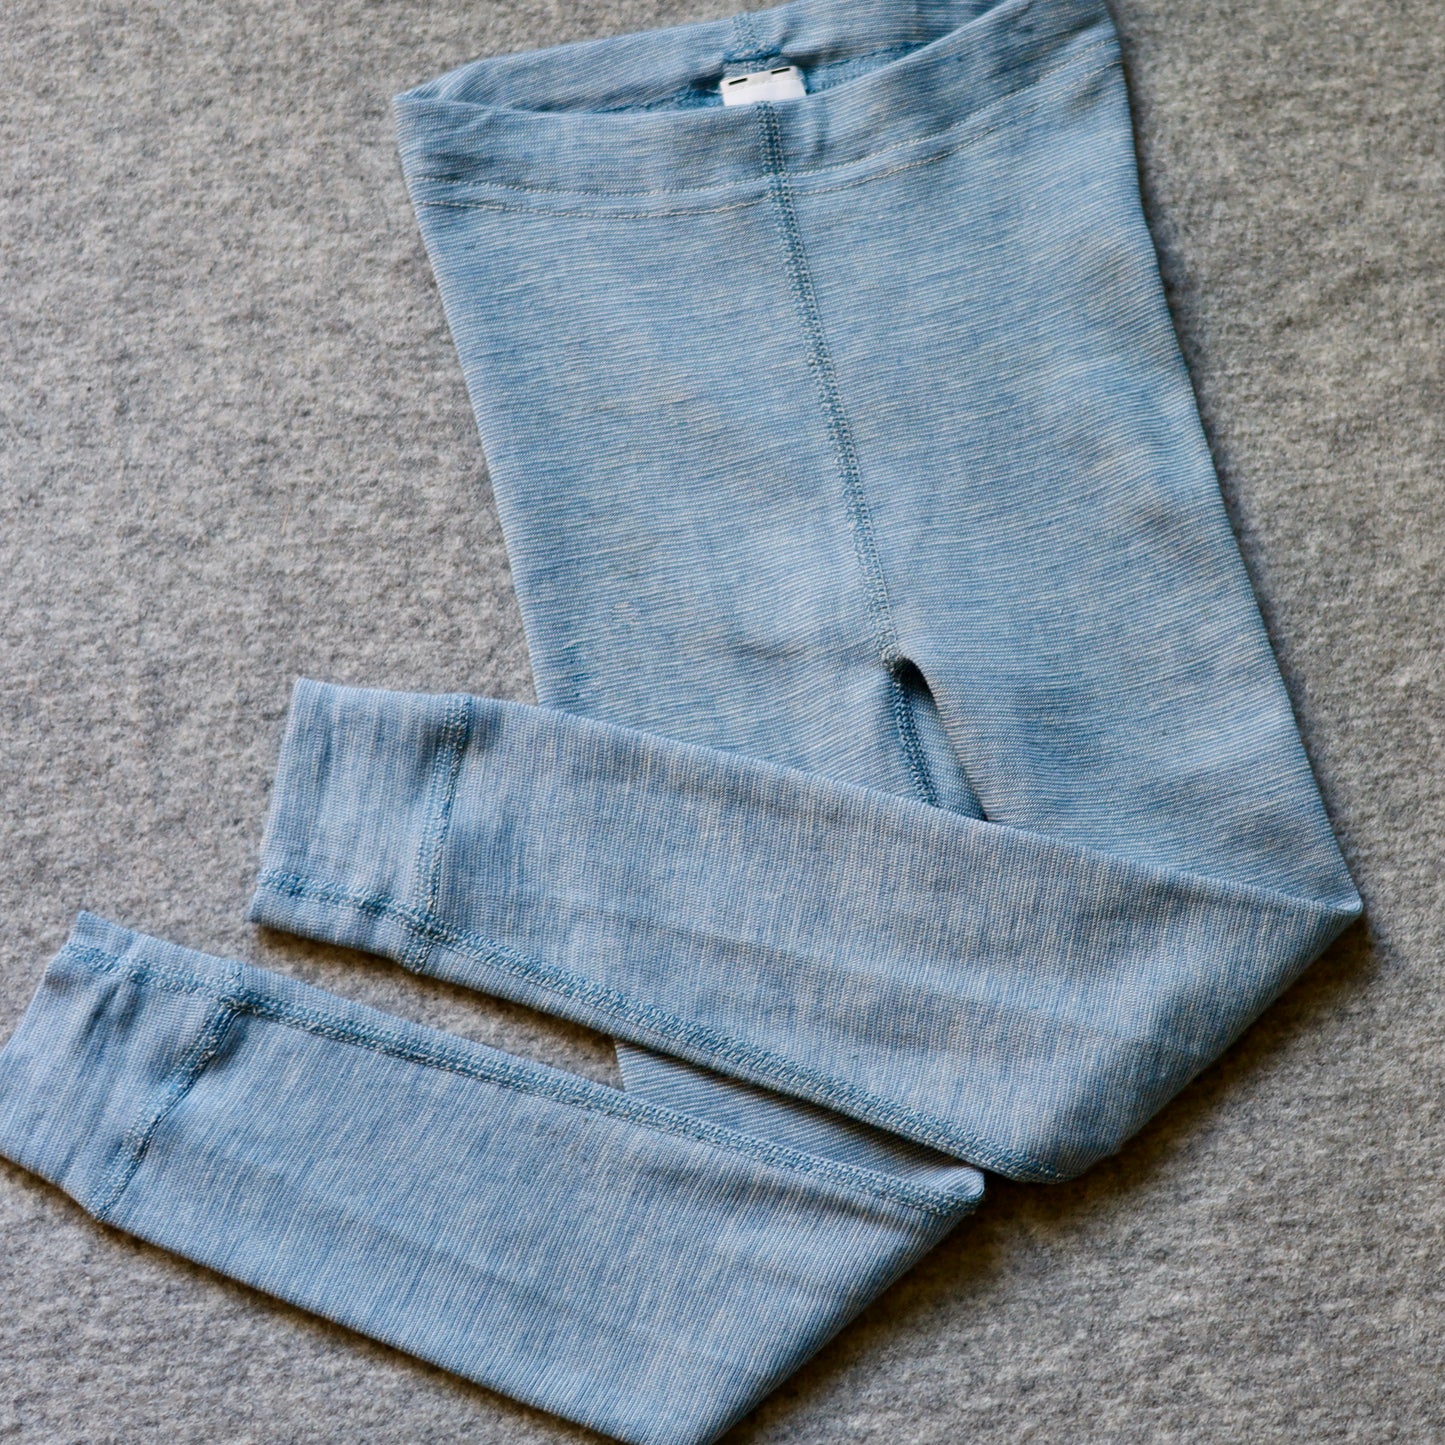 Hocosa Child Legging with Cuff, Wool/Silk, Blue Jean